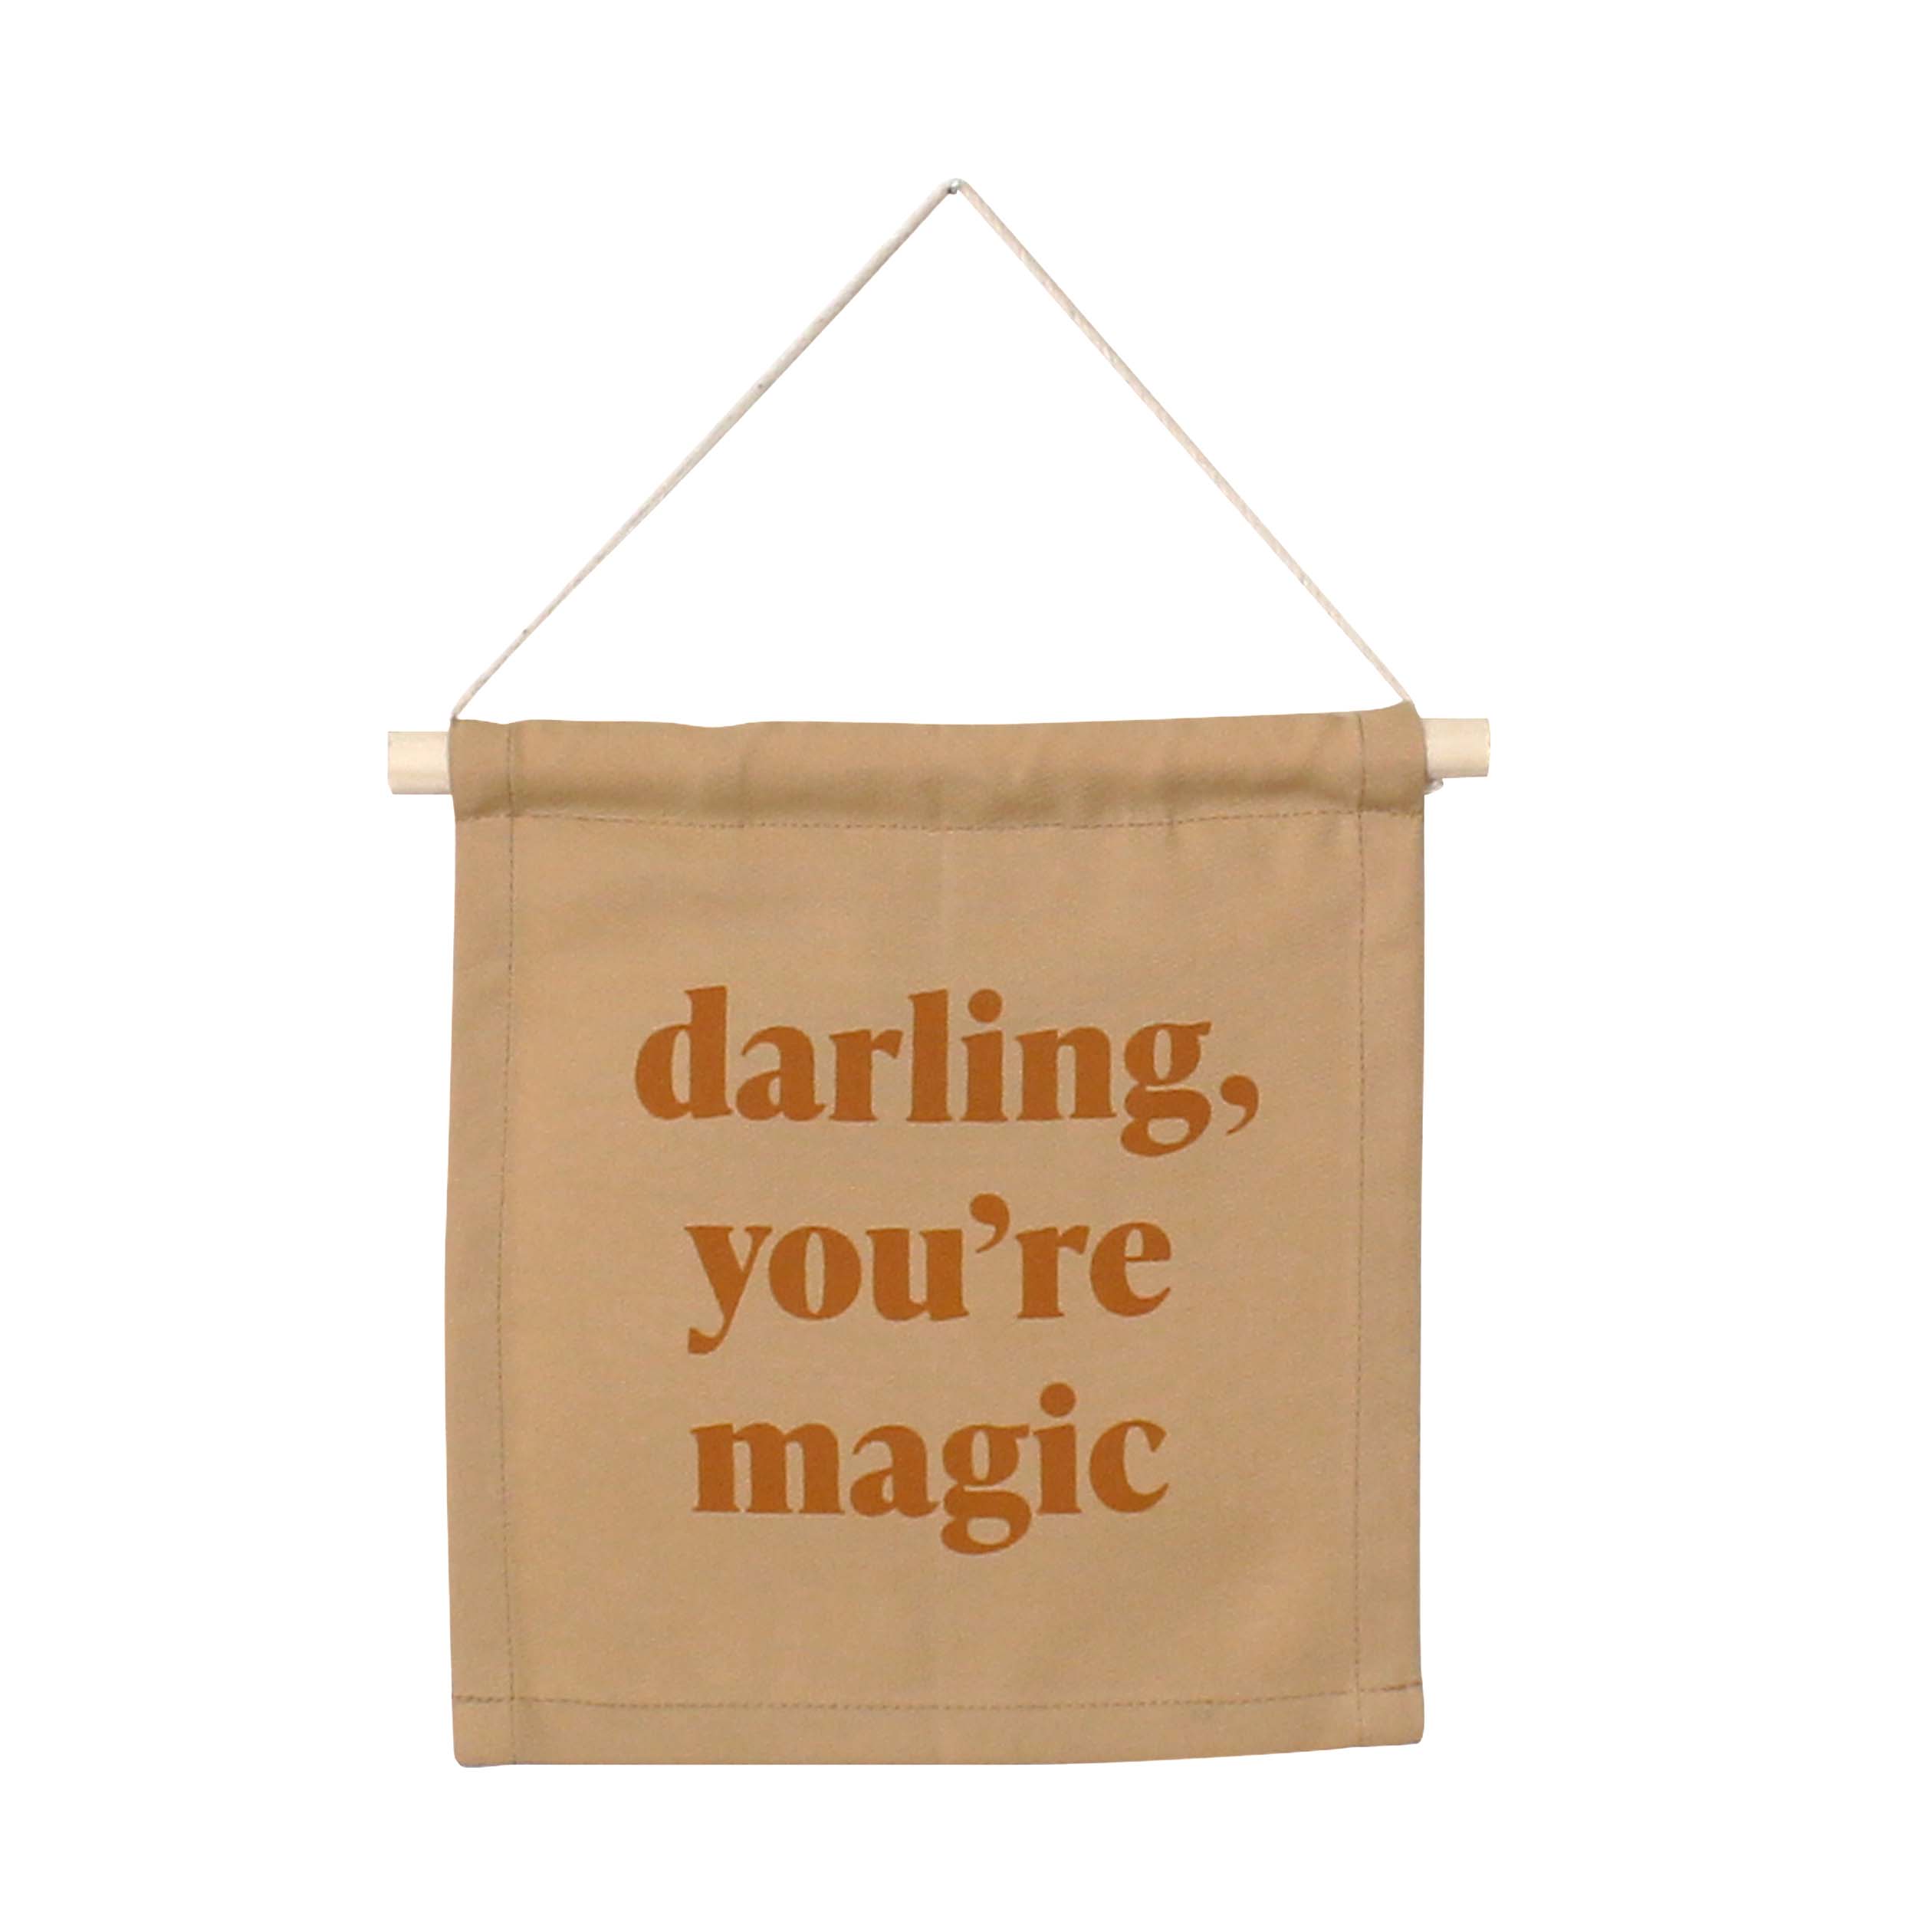 darling you're magic hang sign